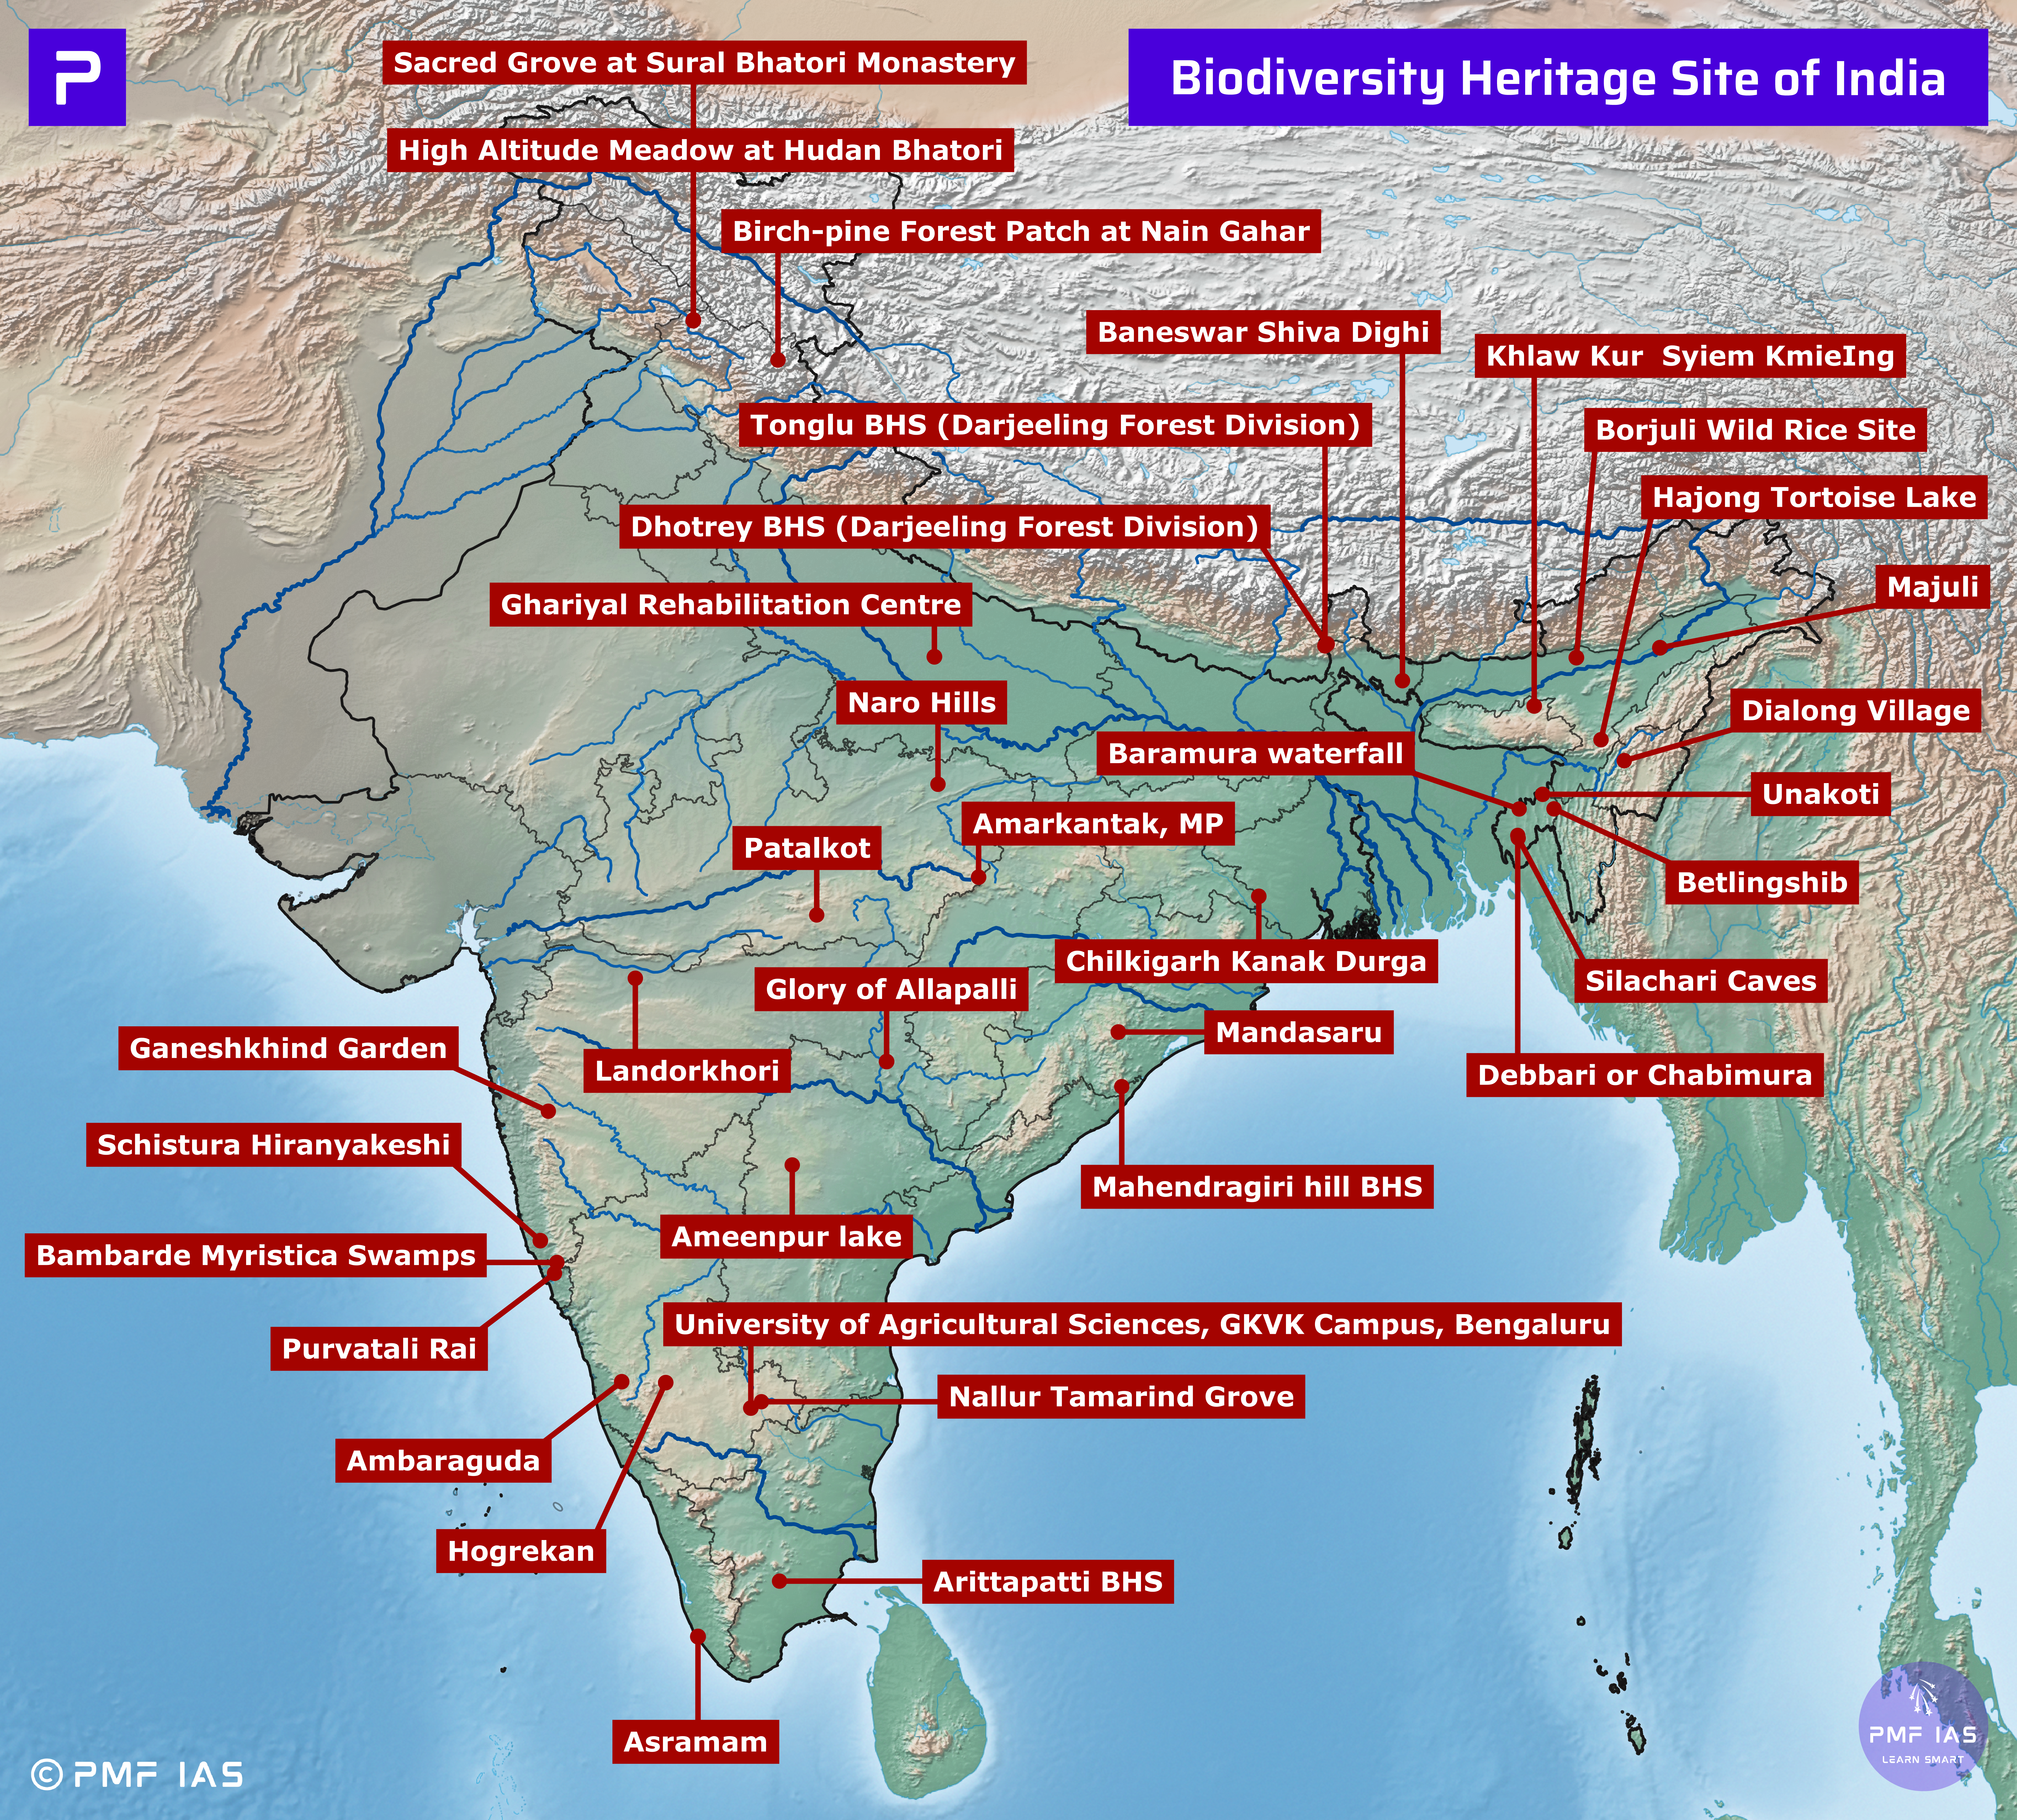 Biodiversity Heritage Site (BHS) of India